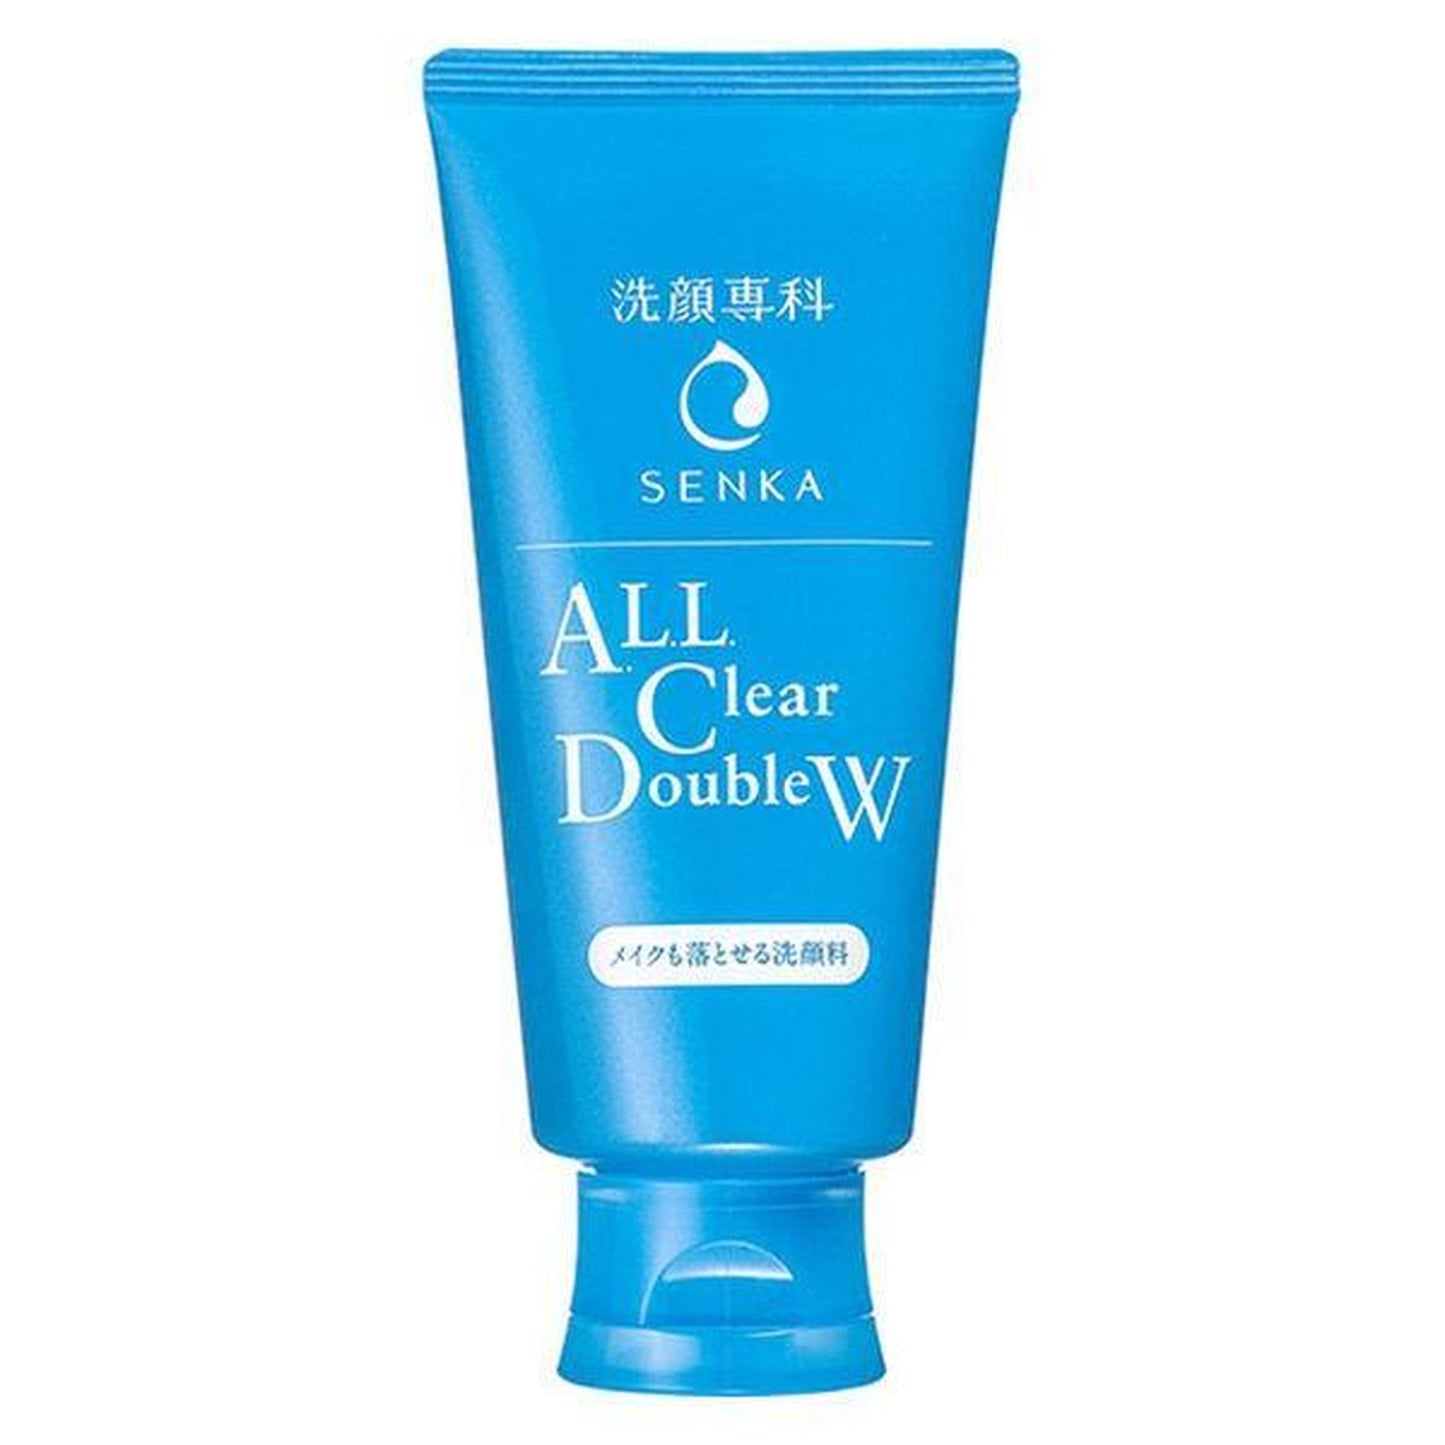 Senka Cleansing Senka Makeup Remover Facial Cleanser 120g